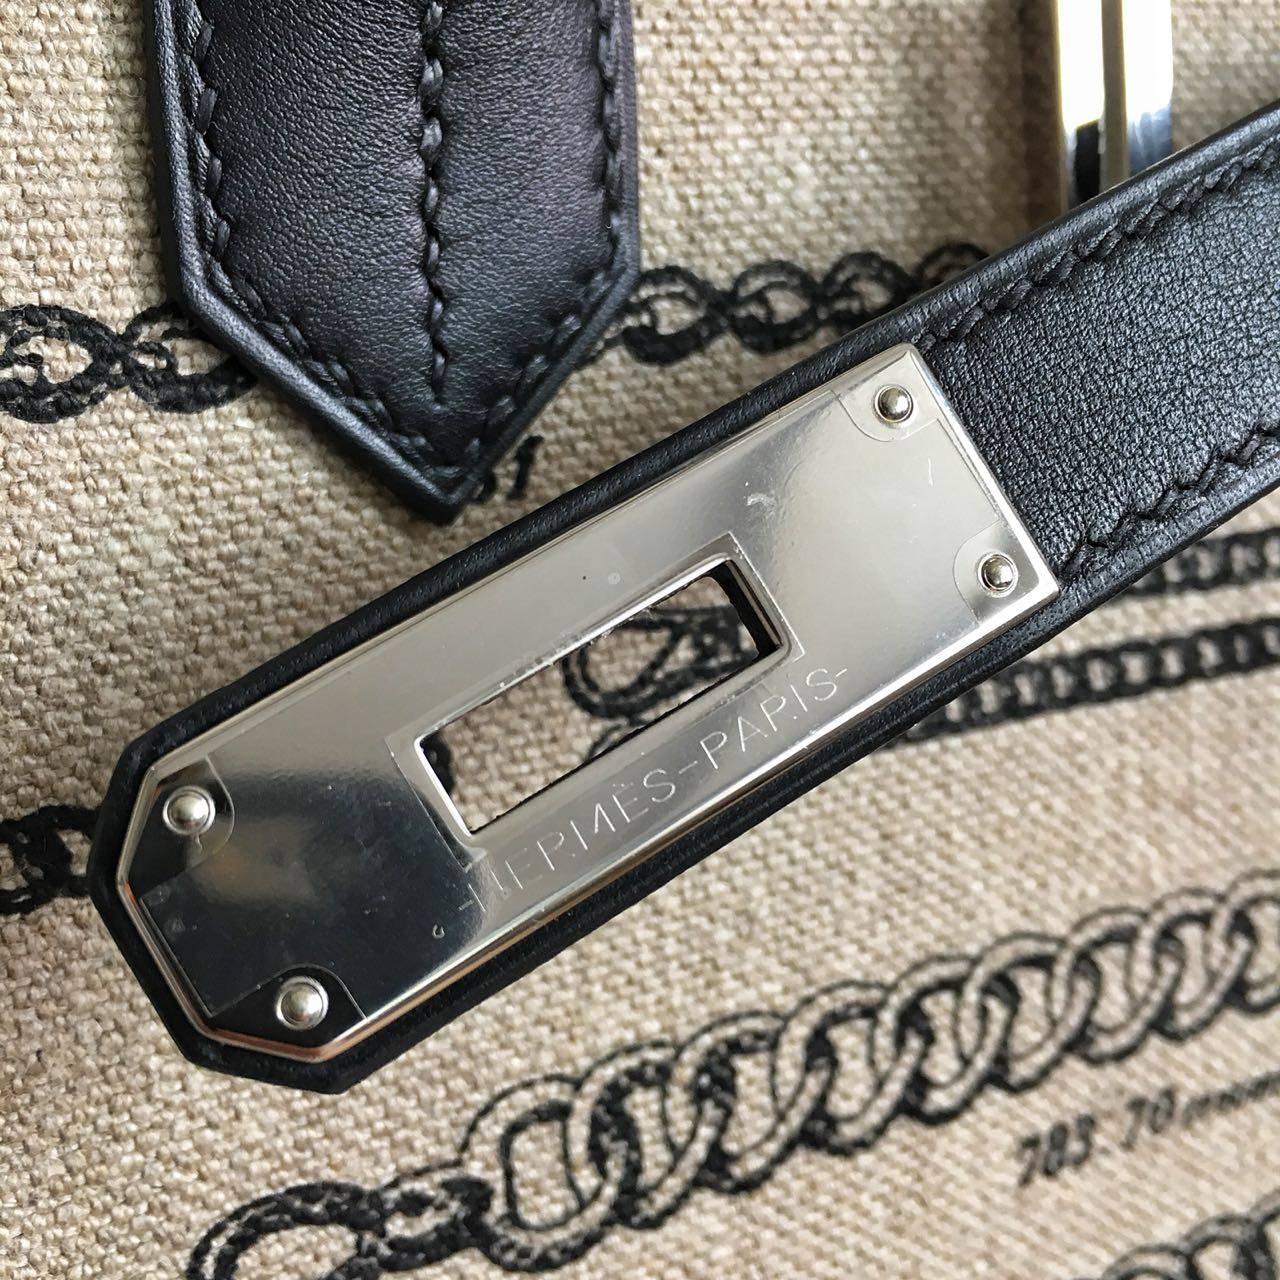 New never worn Hermes Bag
Birkin
Size 35
Limited Toile De Camp Dechainee/Swift Ficelle-Noir/Noir
Palladium hardware

Comes full set: 
Original box
Invoice
Raincoat
Padlock & Keys
Dustbag
